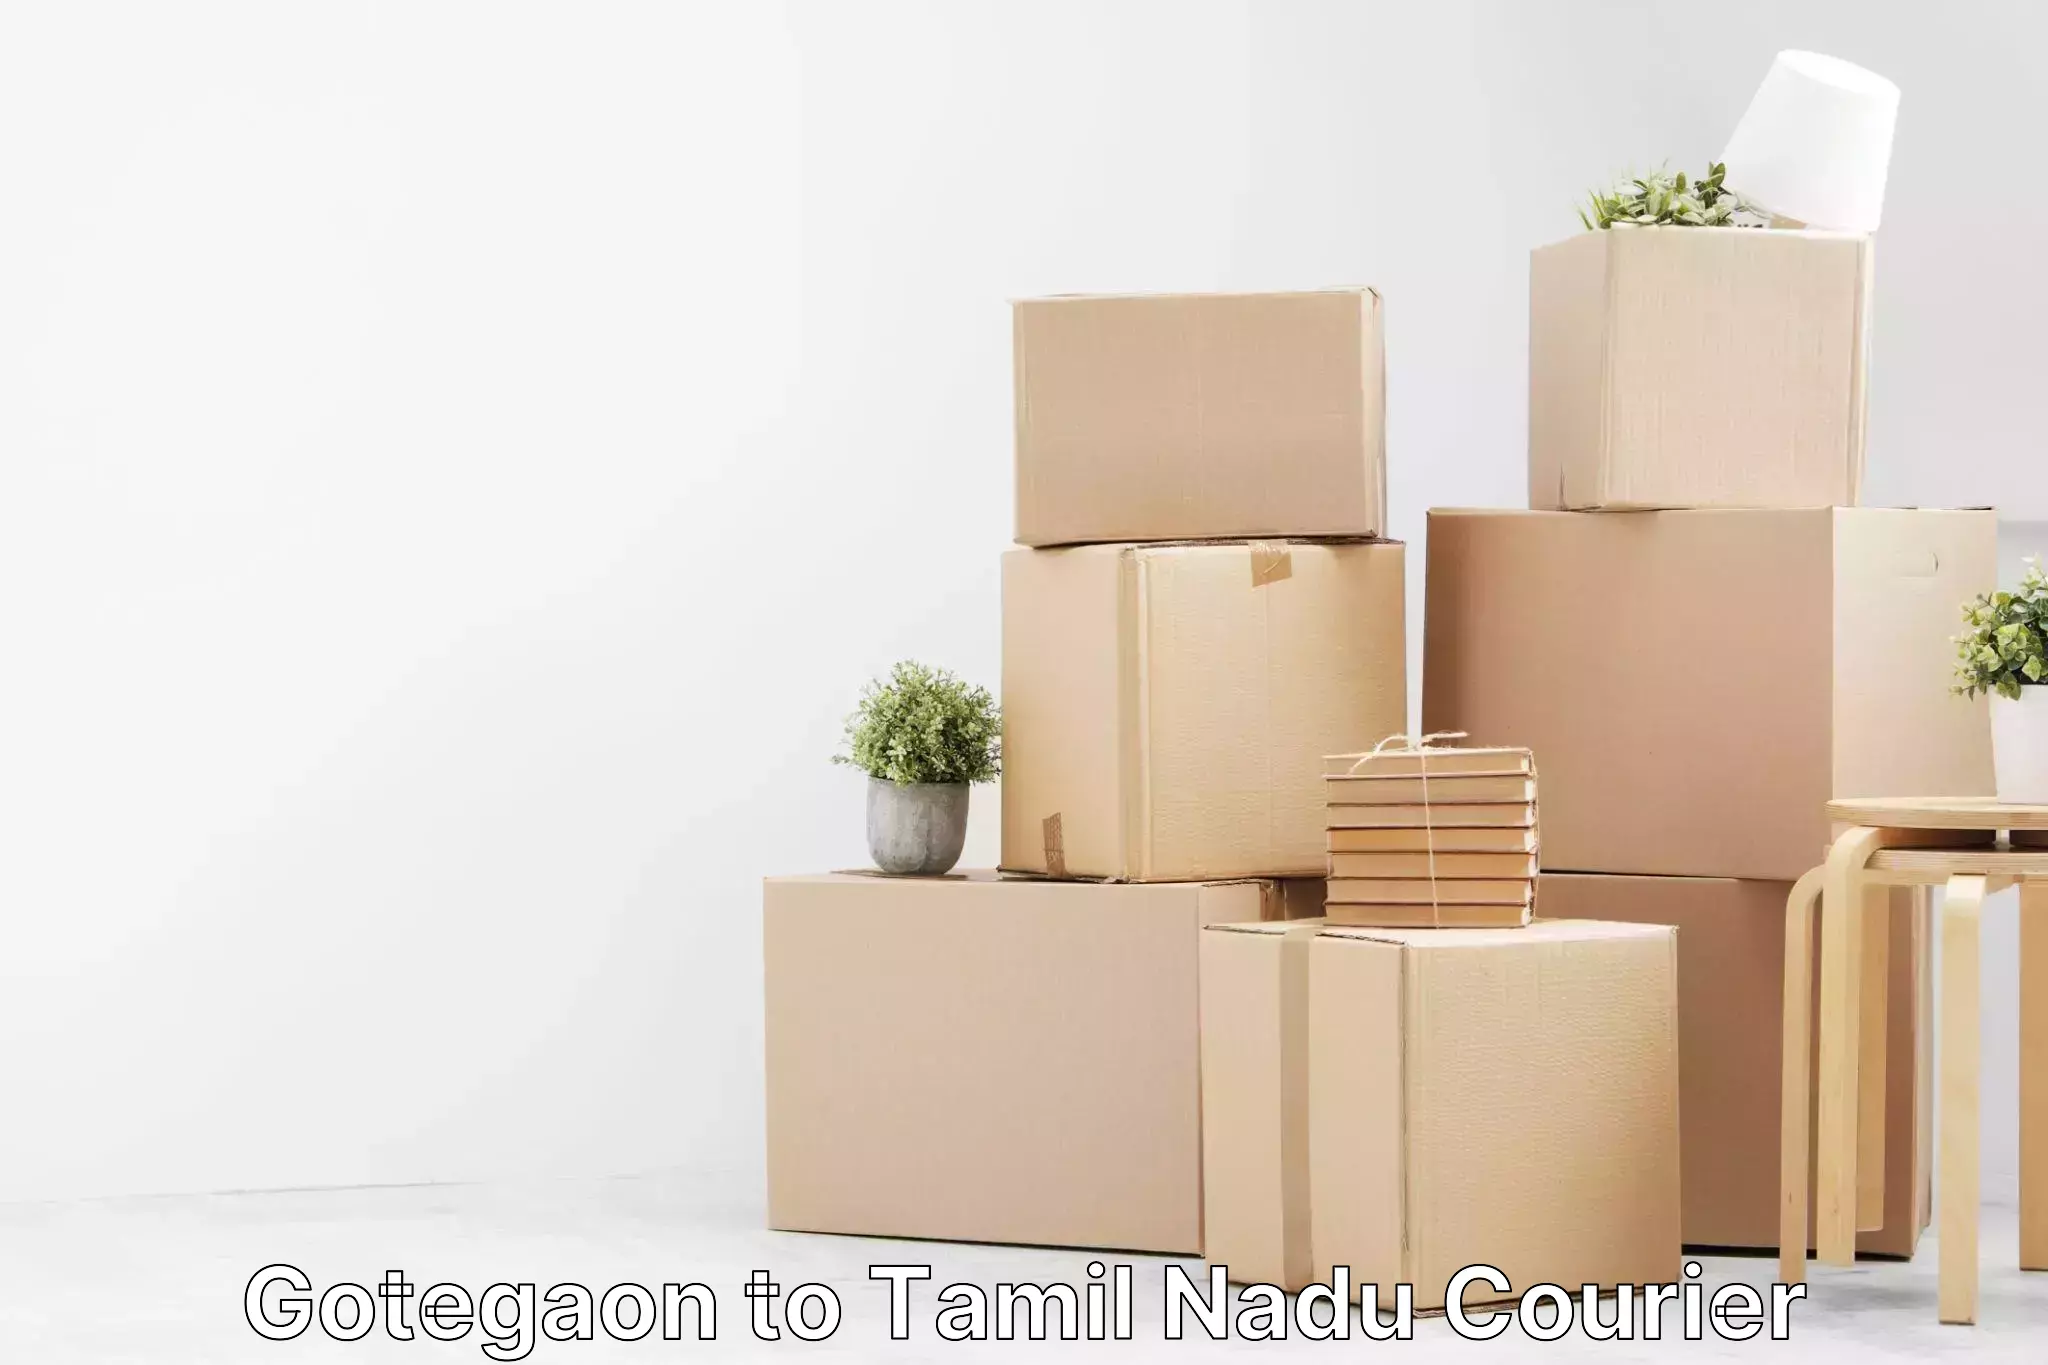 Courier service efficiency Gotegaon to Tamil Nadu